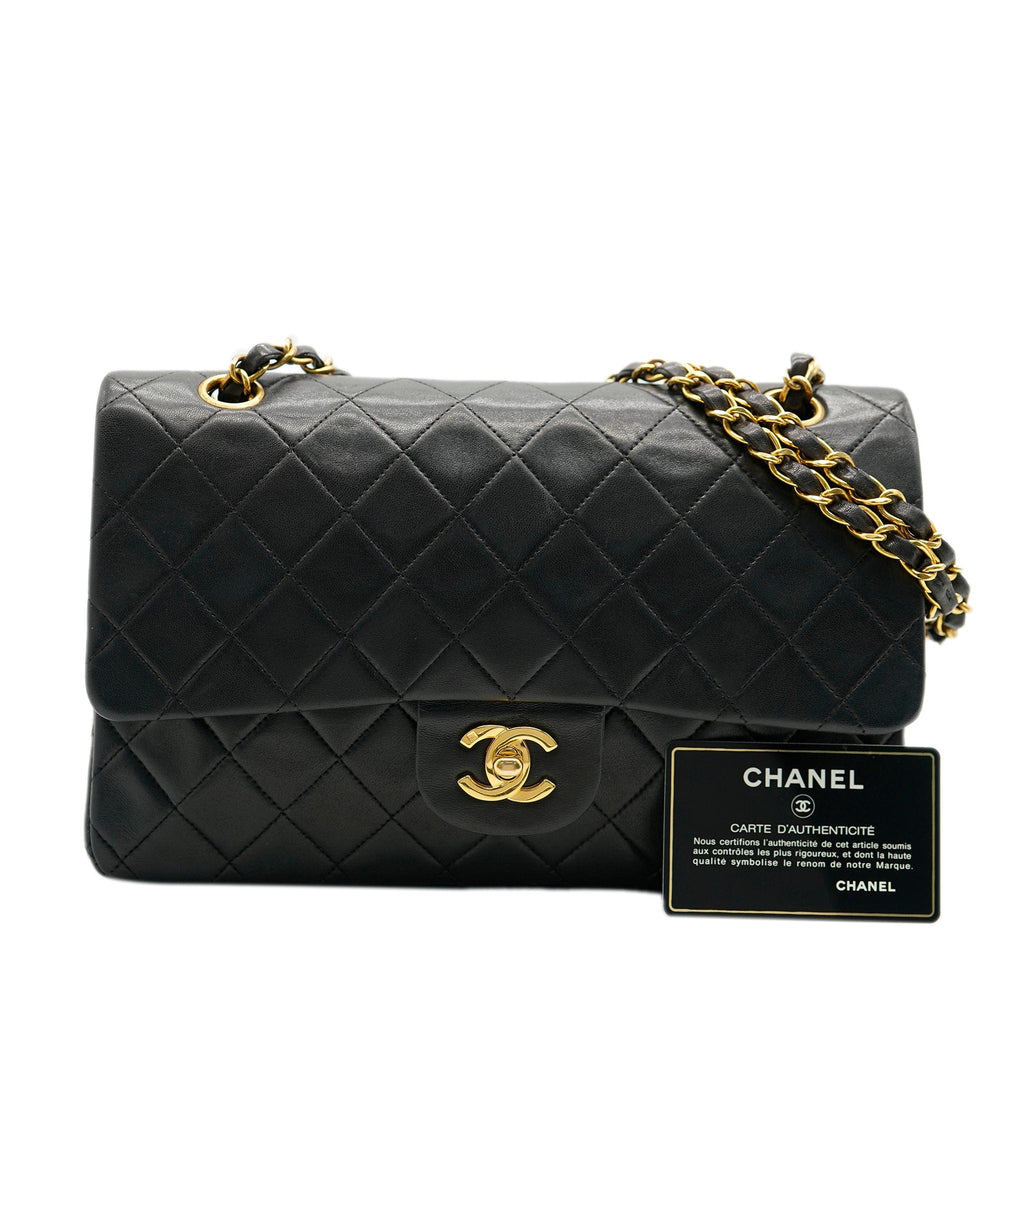 Handbags Chanel Chanel Chain Shoulder Bag Clutch Black Quilted Flap Lambskin Purse